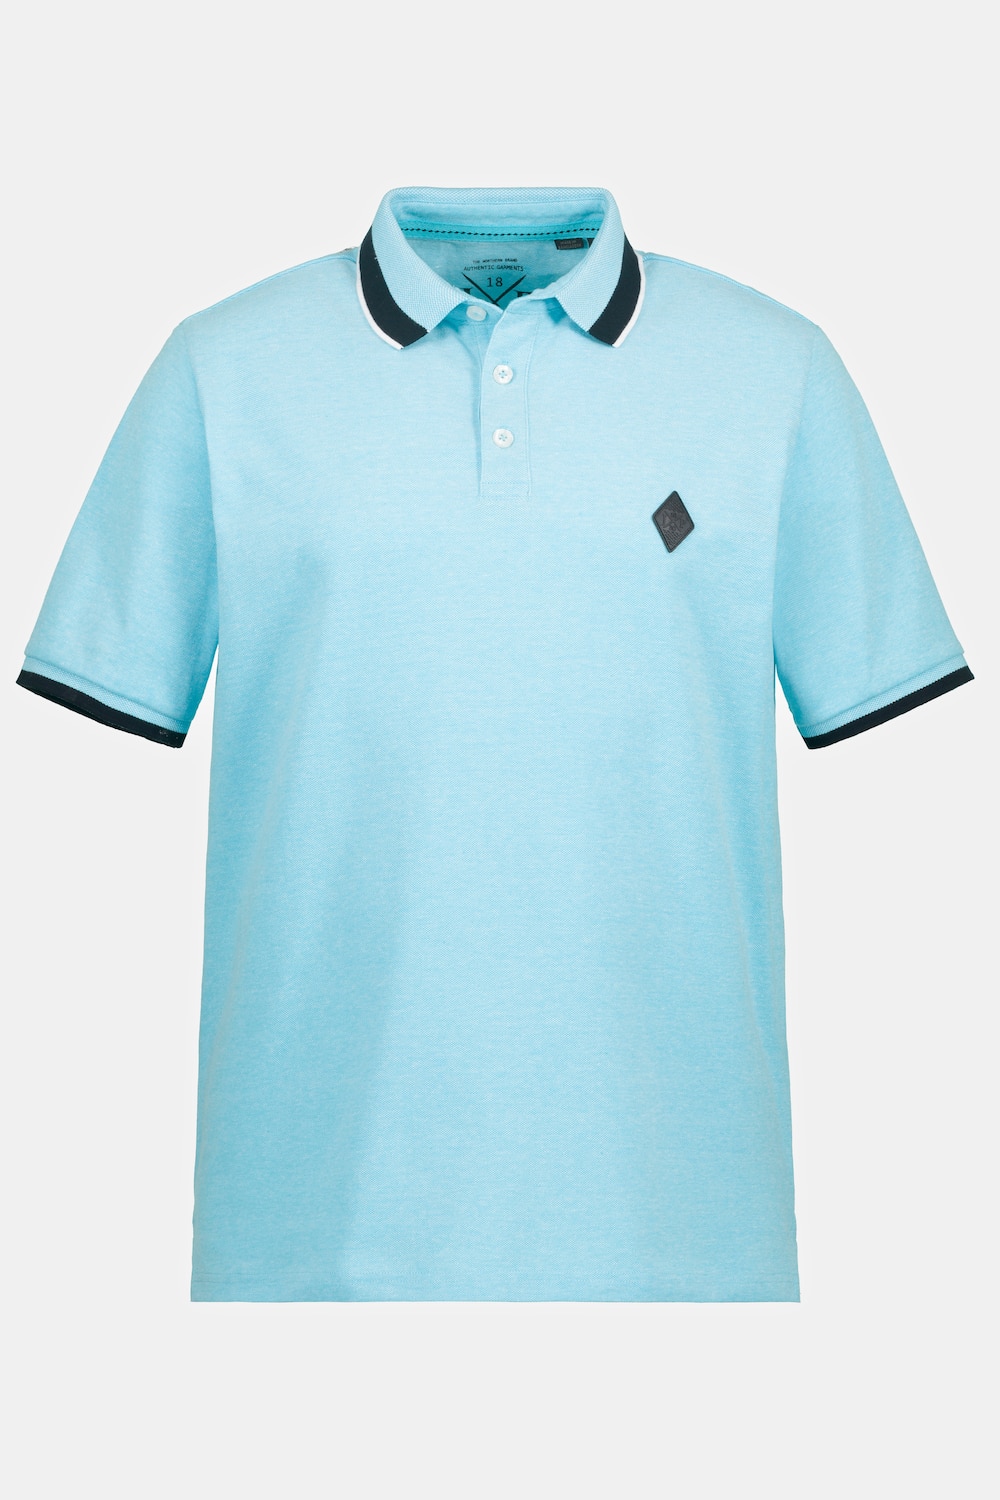 Poloshirt, Große Größen, Herren, türkis, Größe: L, Baumwolle, JP1880 product